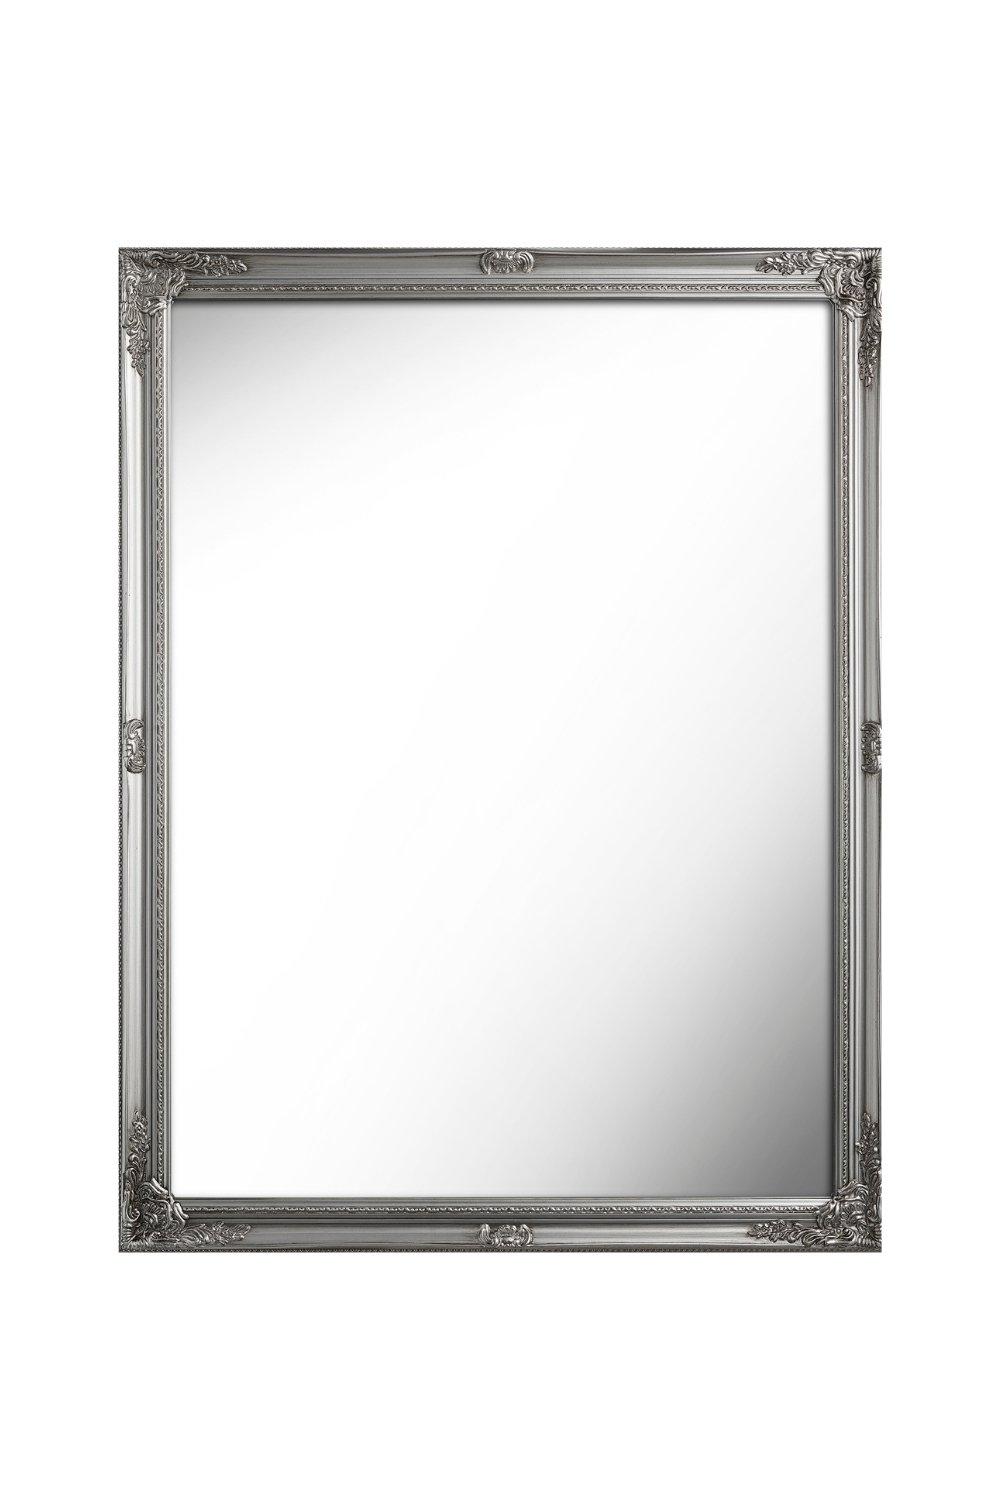 Ornate French-Design Rectangular Wall Mirror Silver 112 x 86cm